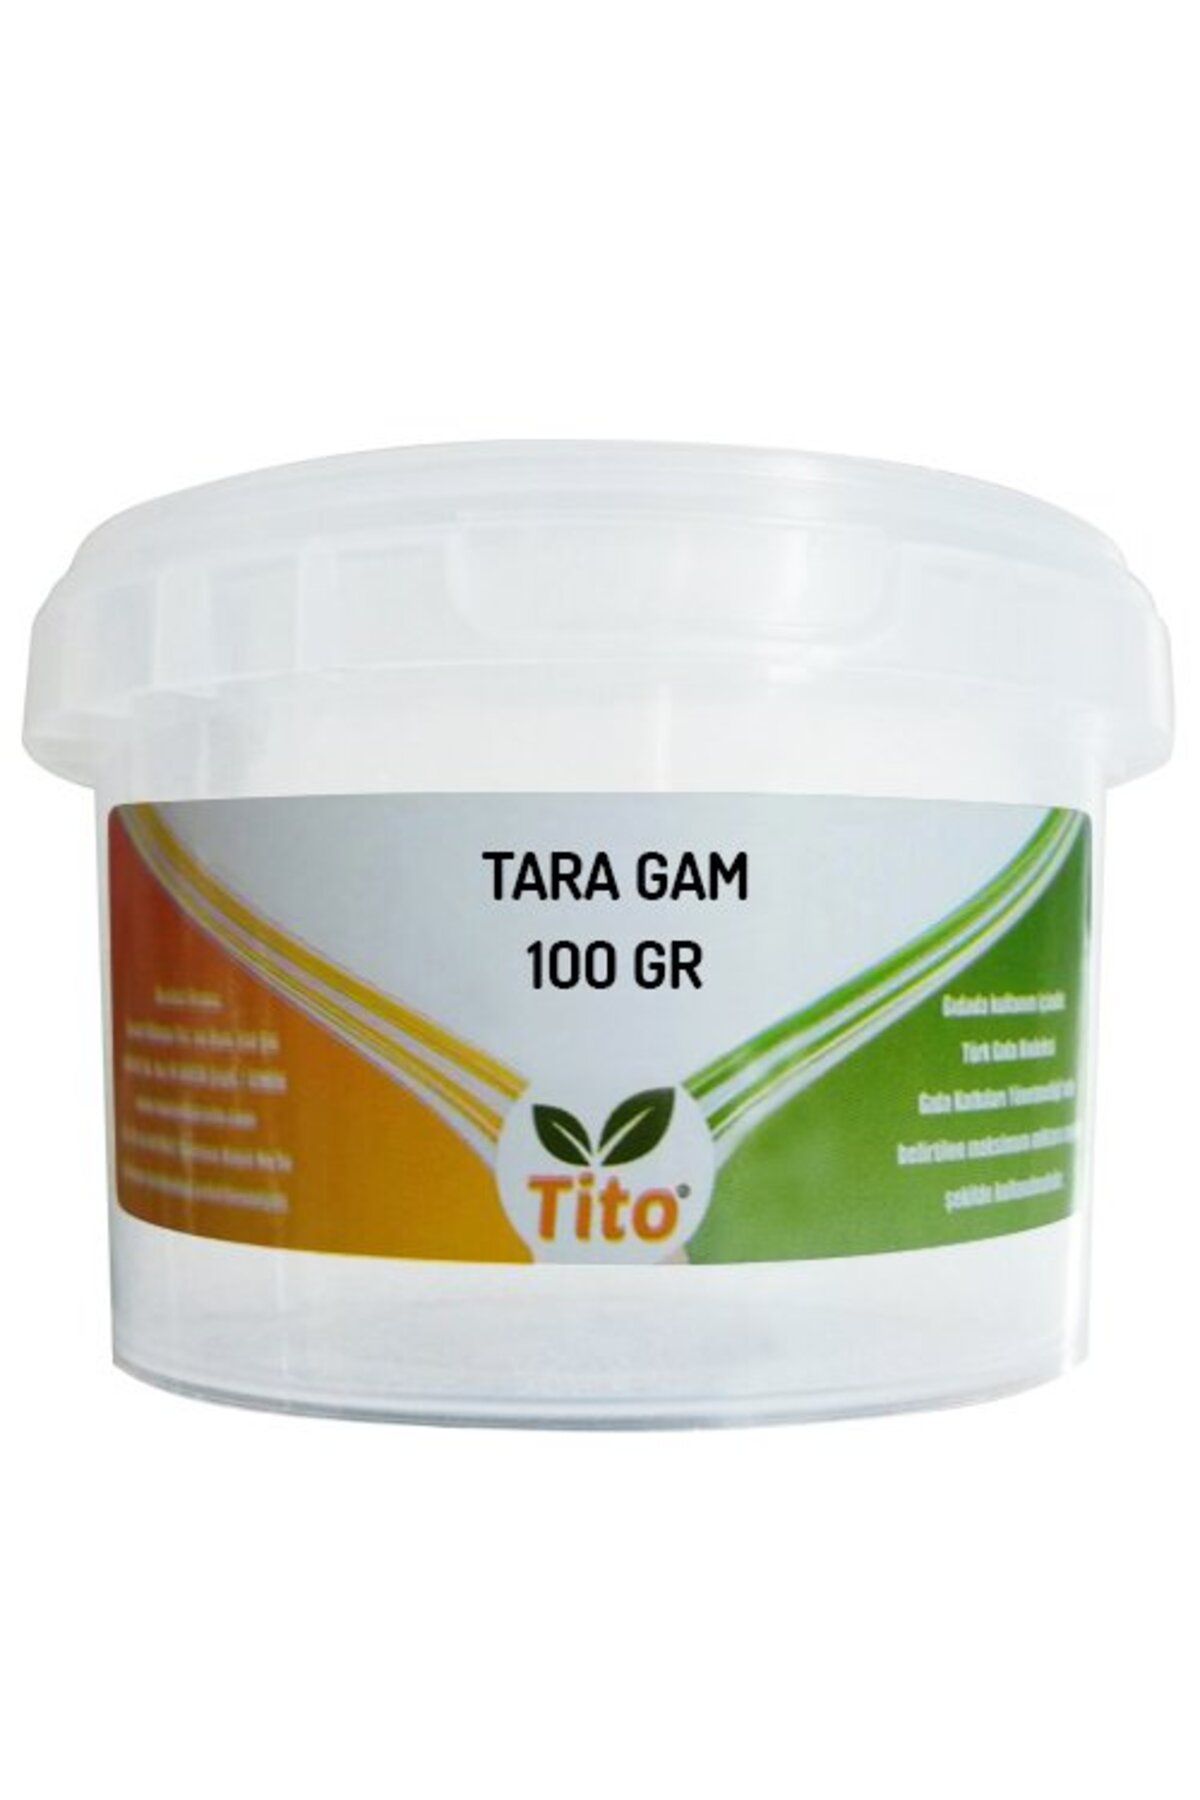 tito Tara Gam E417 100 G